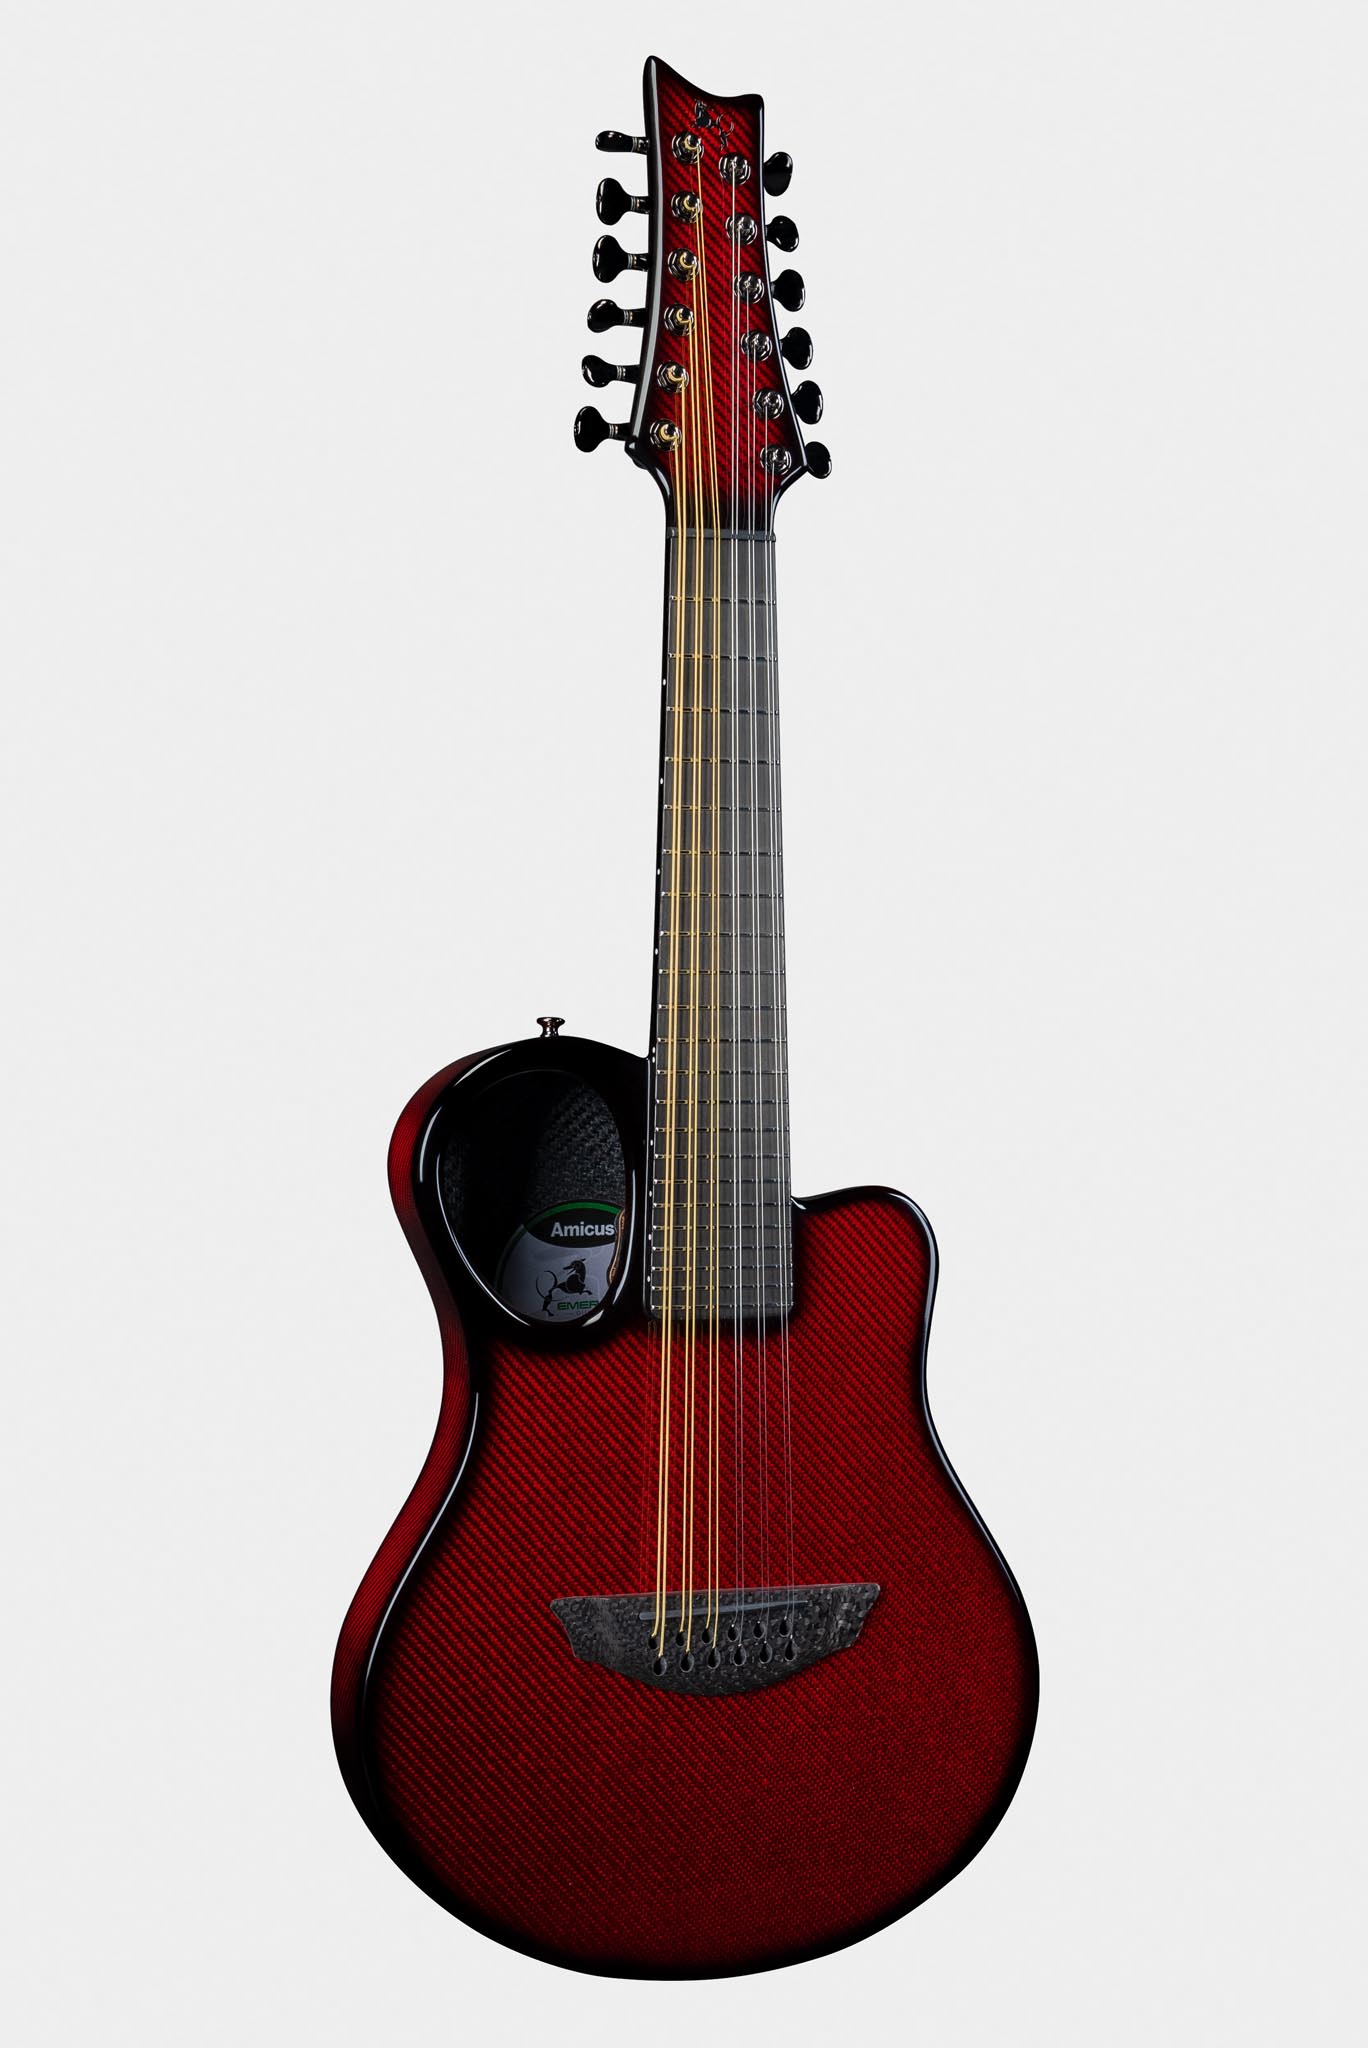 Emerald Amicus Carbon Fiber Guitar in Vibrant Red